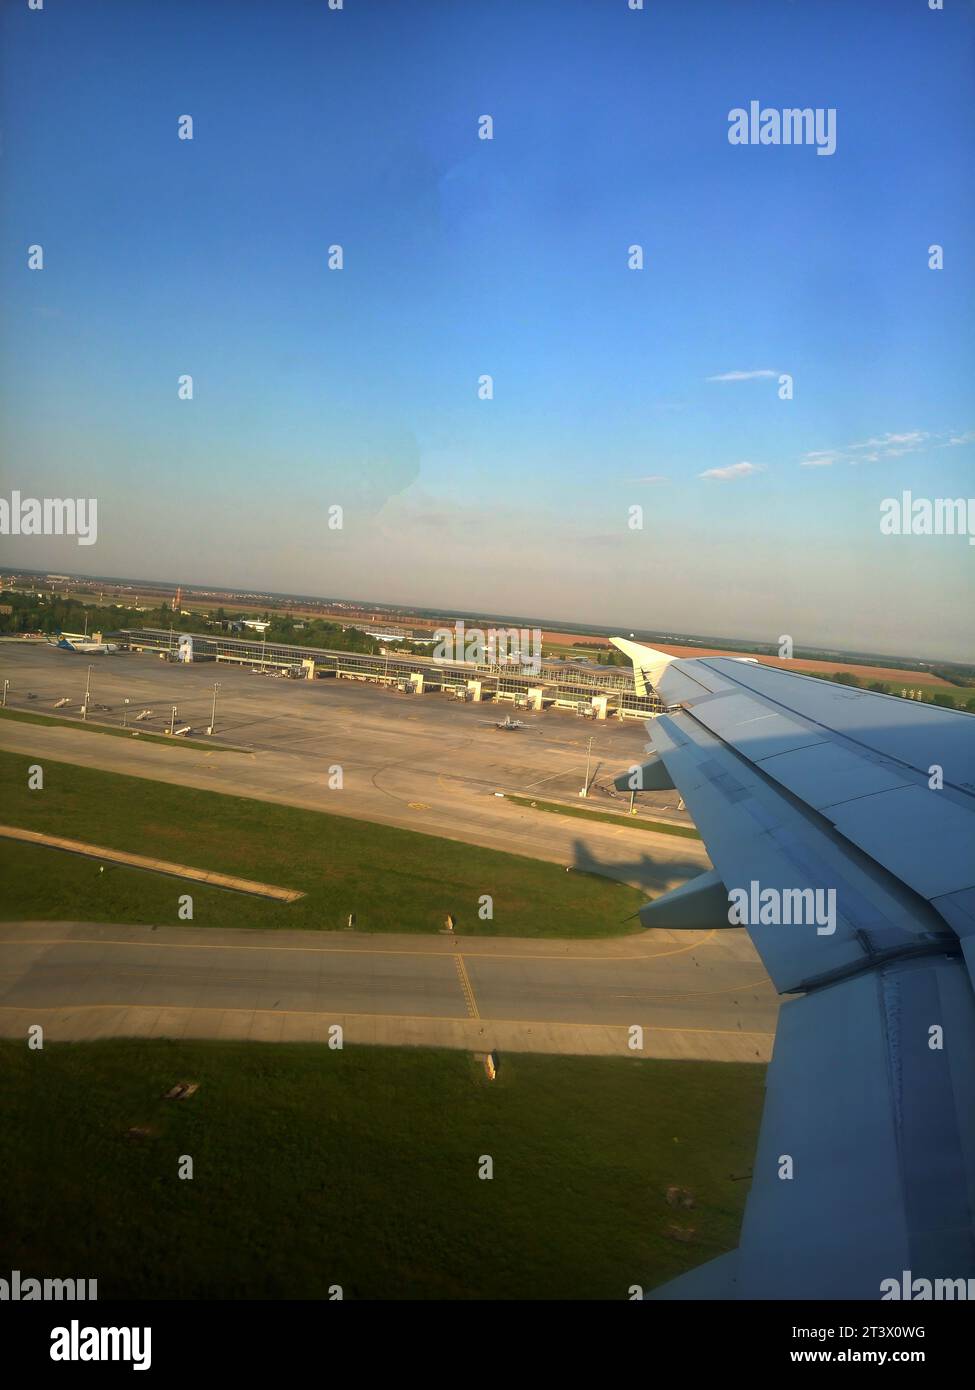 Plane flies over Boryspil airport, Ukraine. Plane metal wing shining in the sunrays Stock Photo